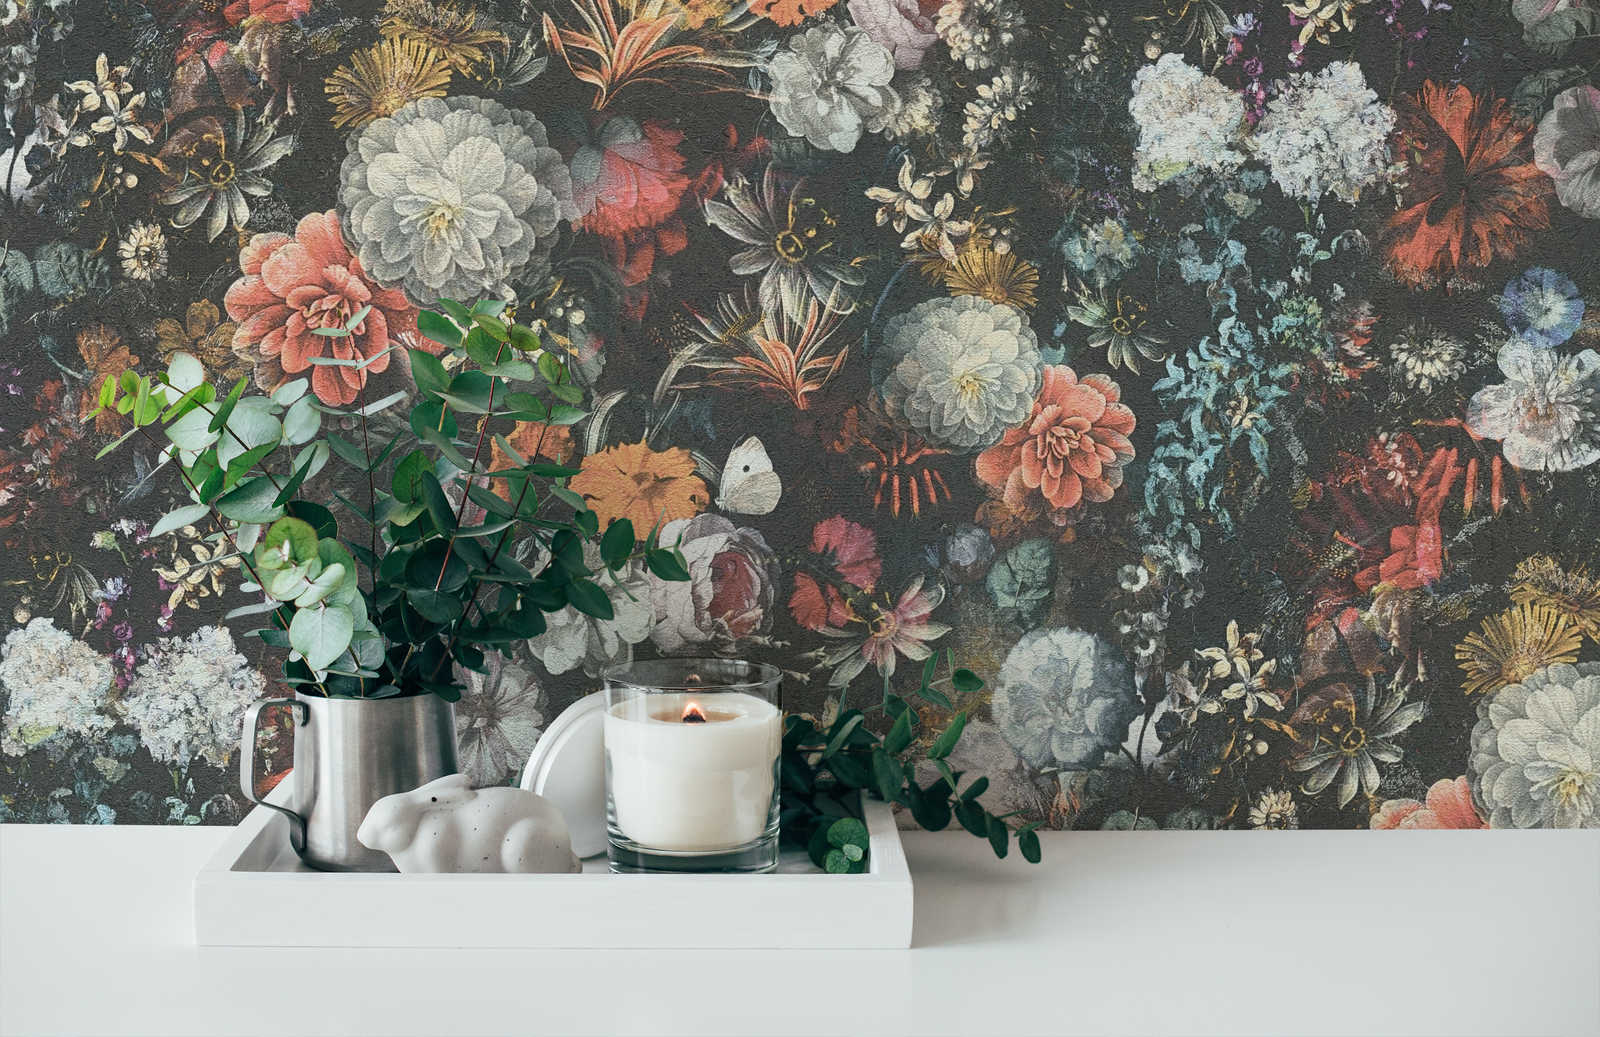             Flowers wallpaper vintage design with roses - colourful, grey, orange
        